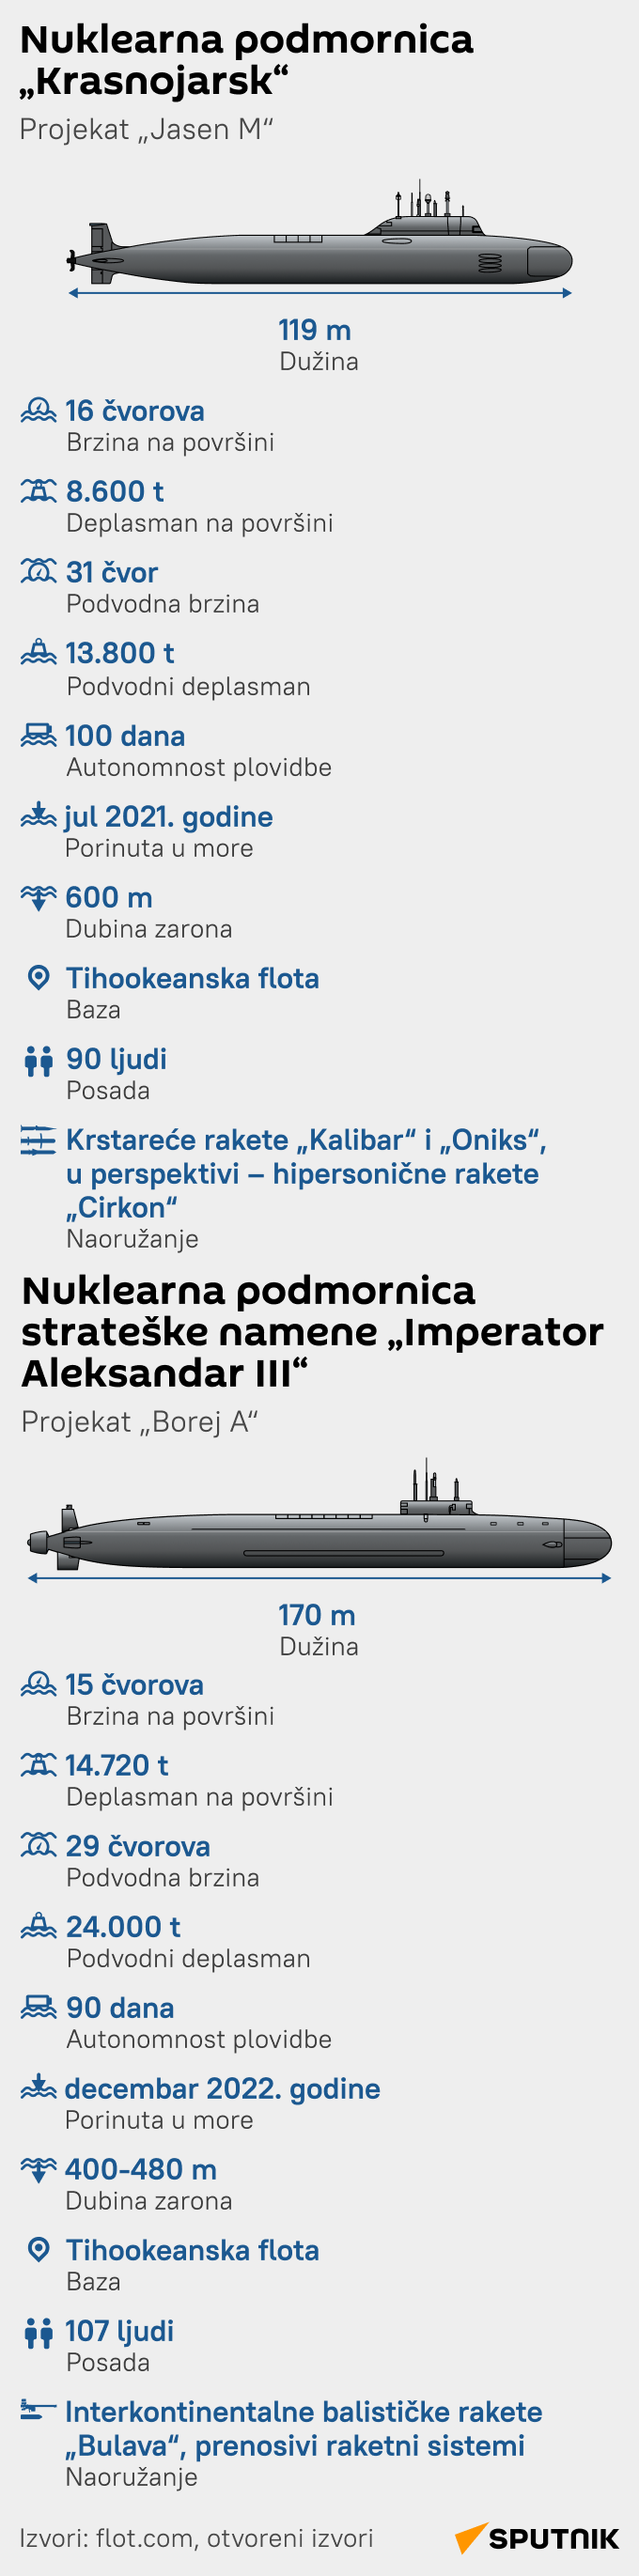 INFOGRAFIKA ruske podmornice LAT mob - Sputnik Srbija